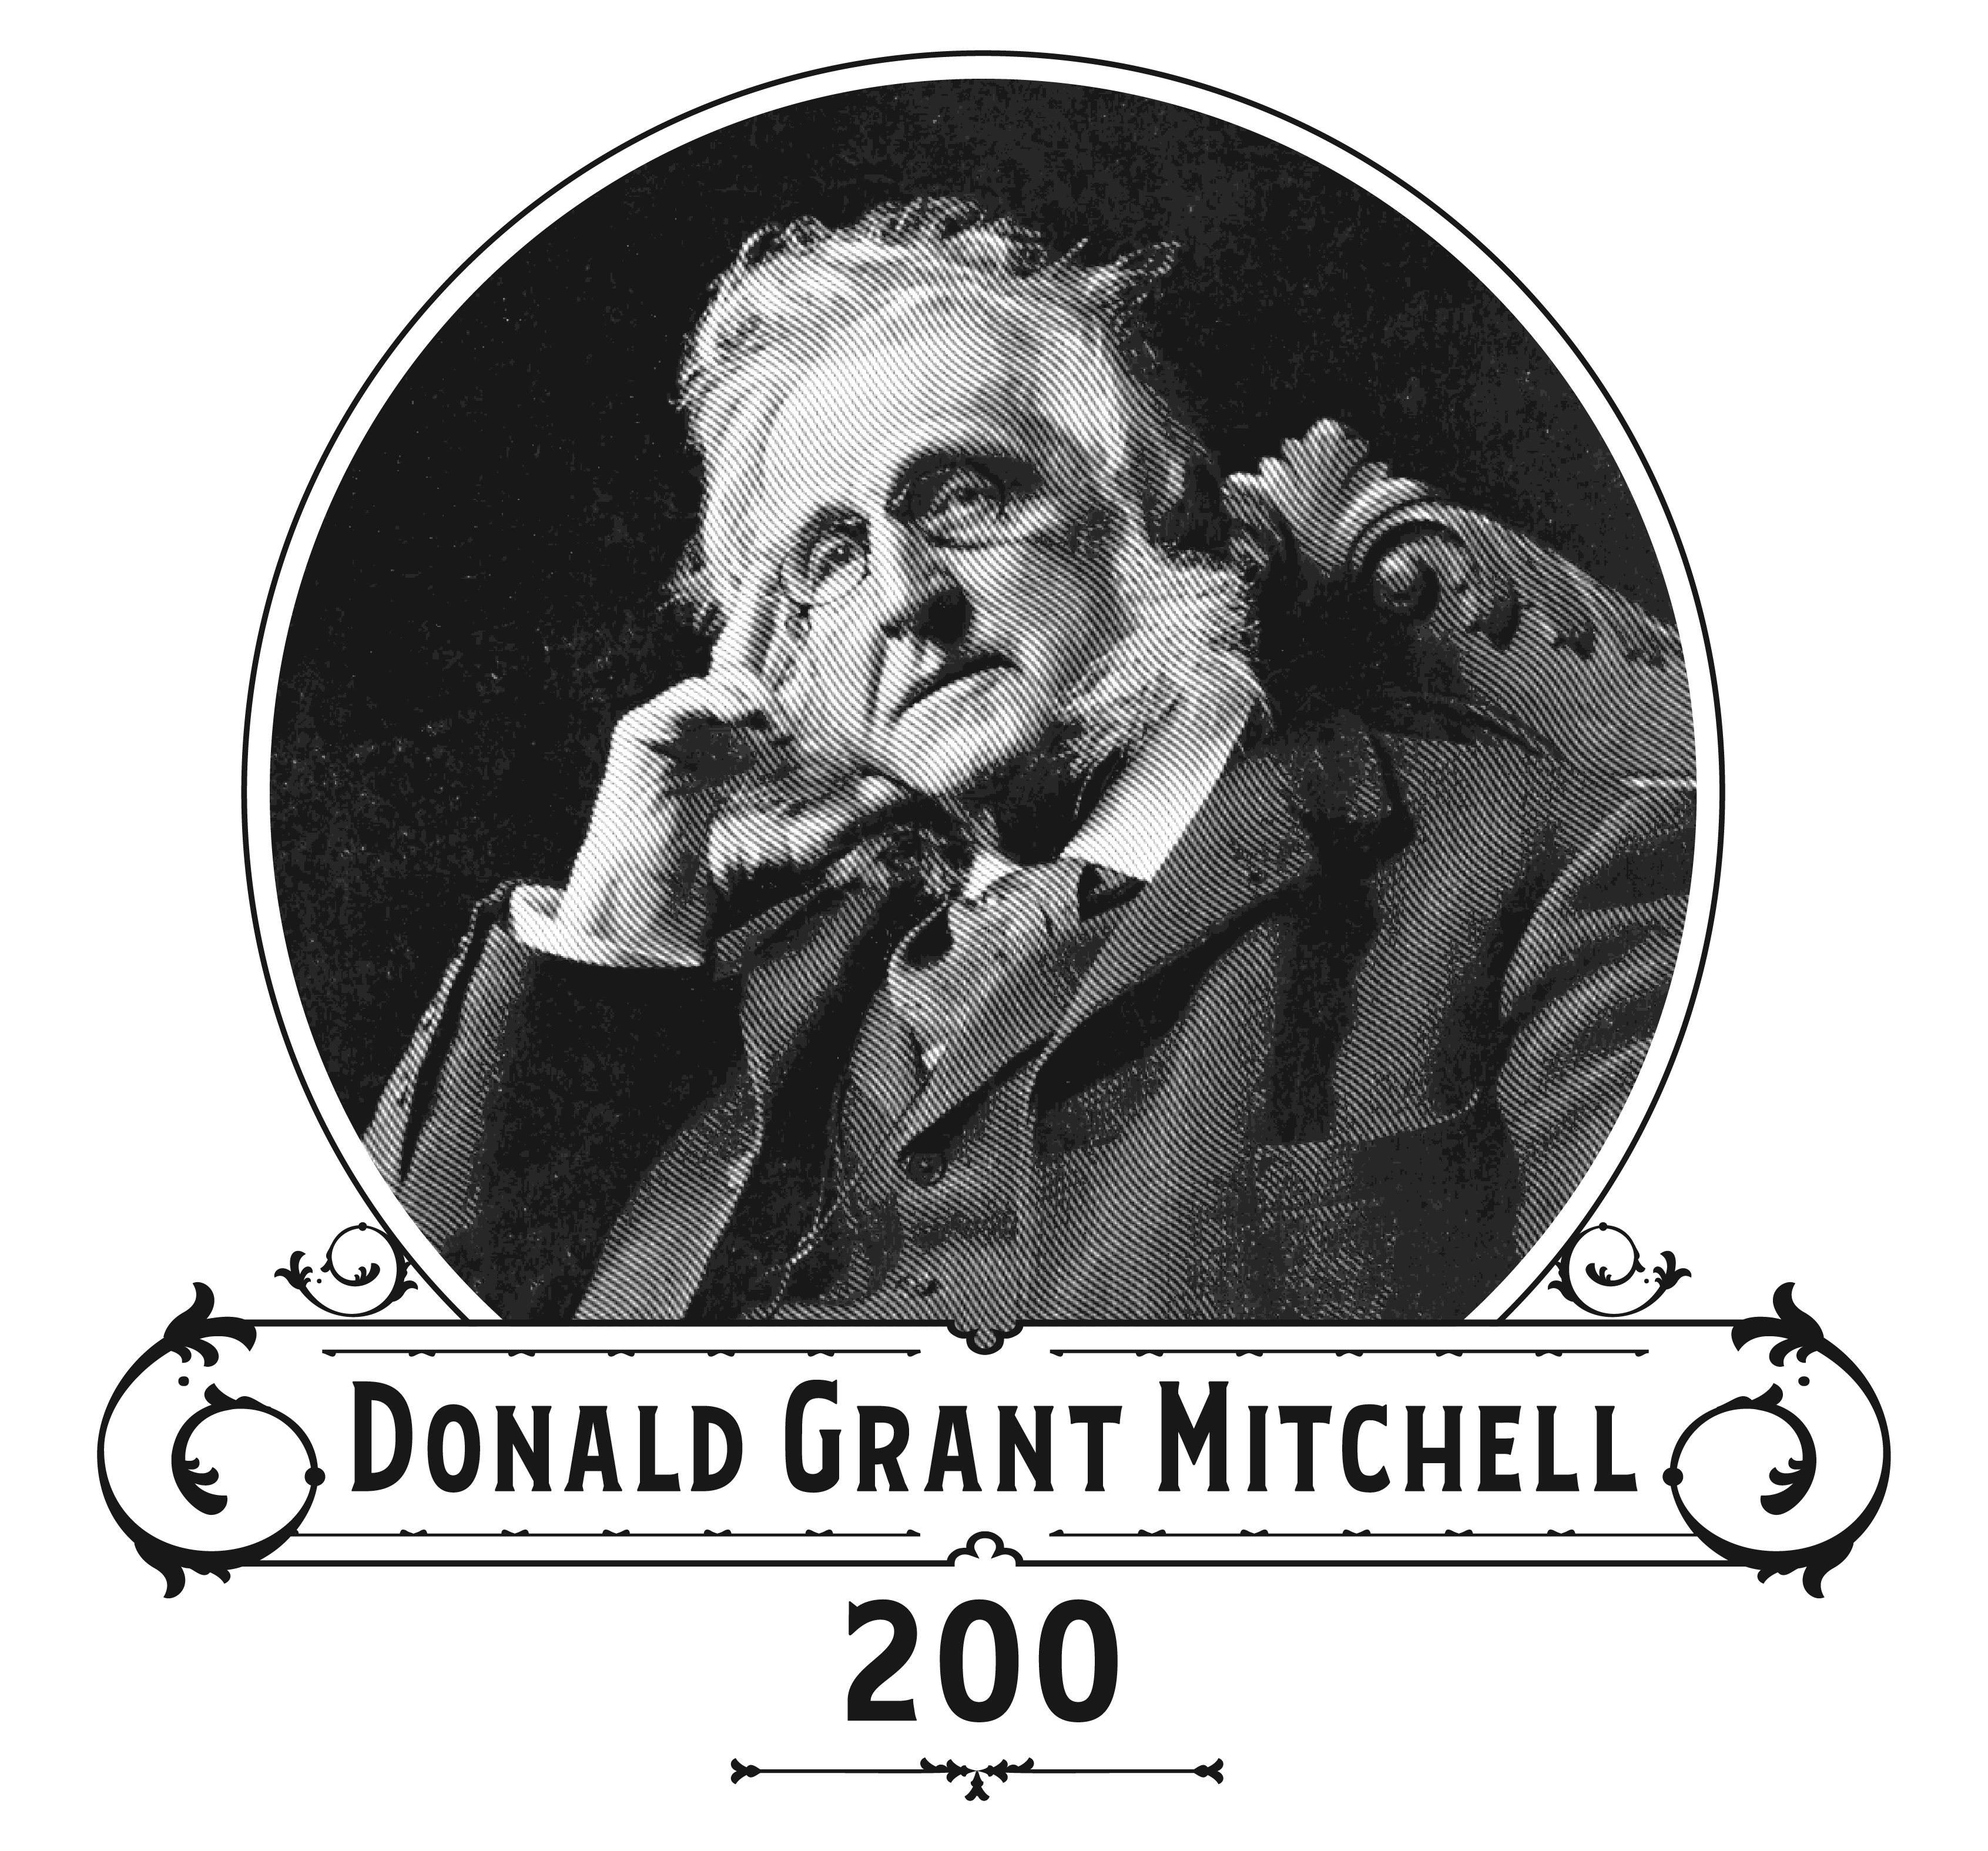 Donald Grant Mitchell Bicenntenial Celebration